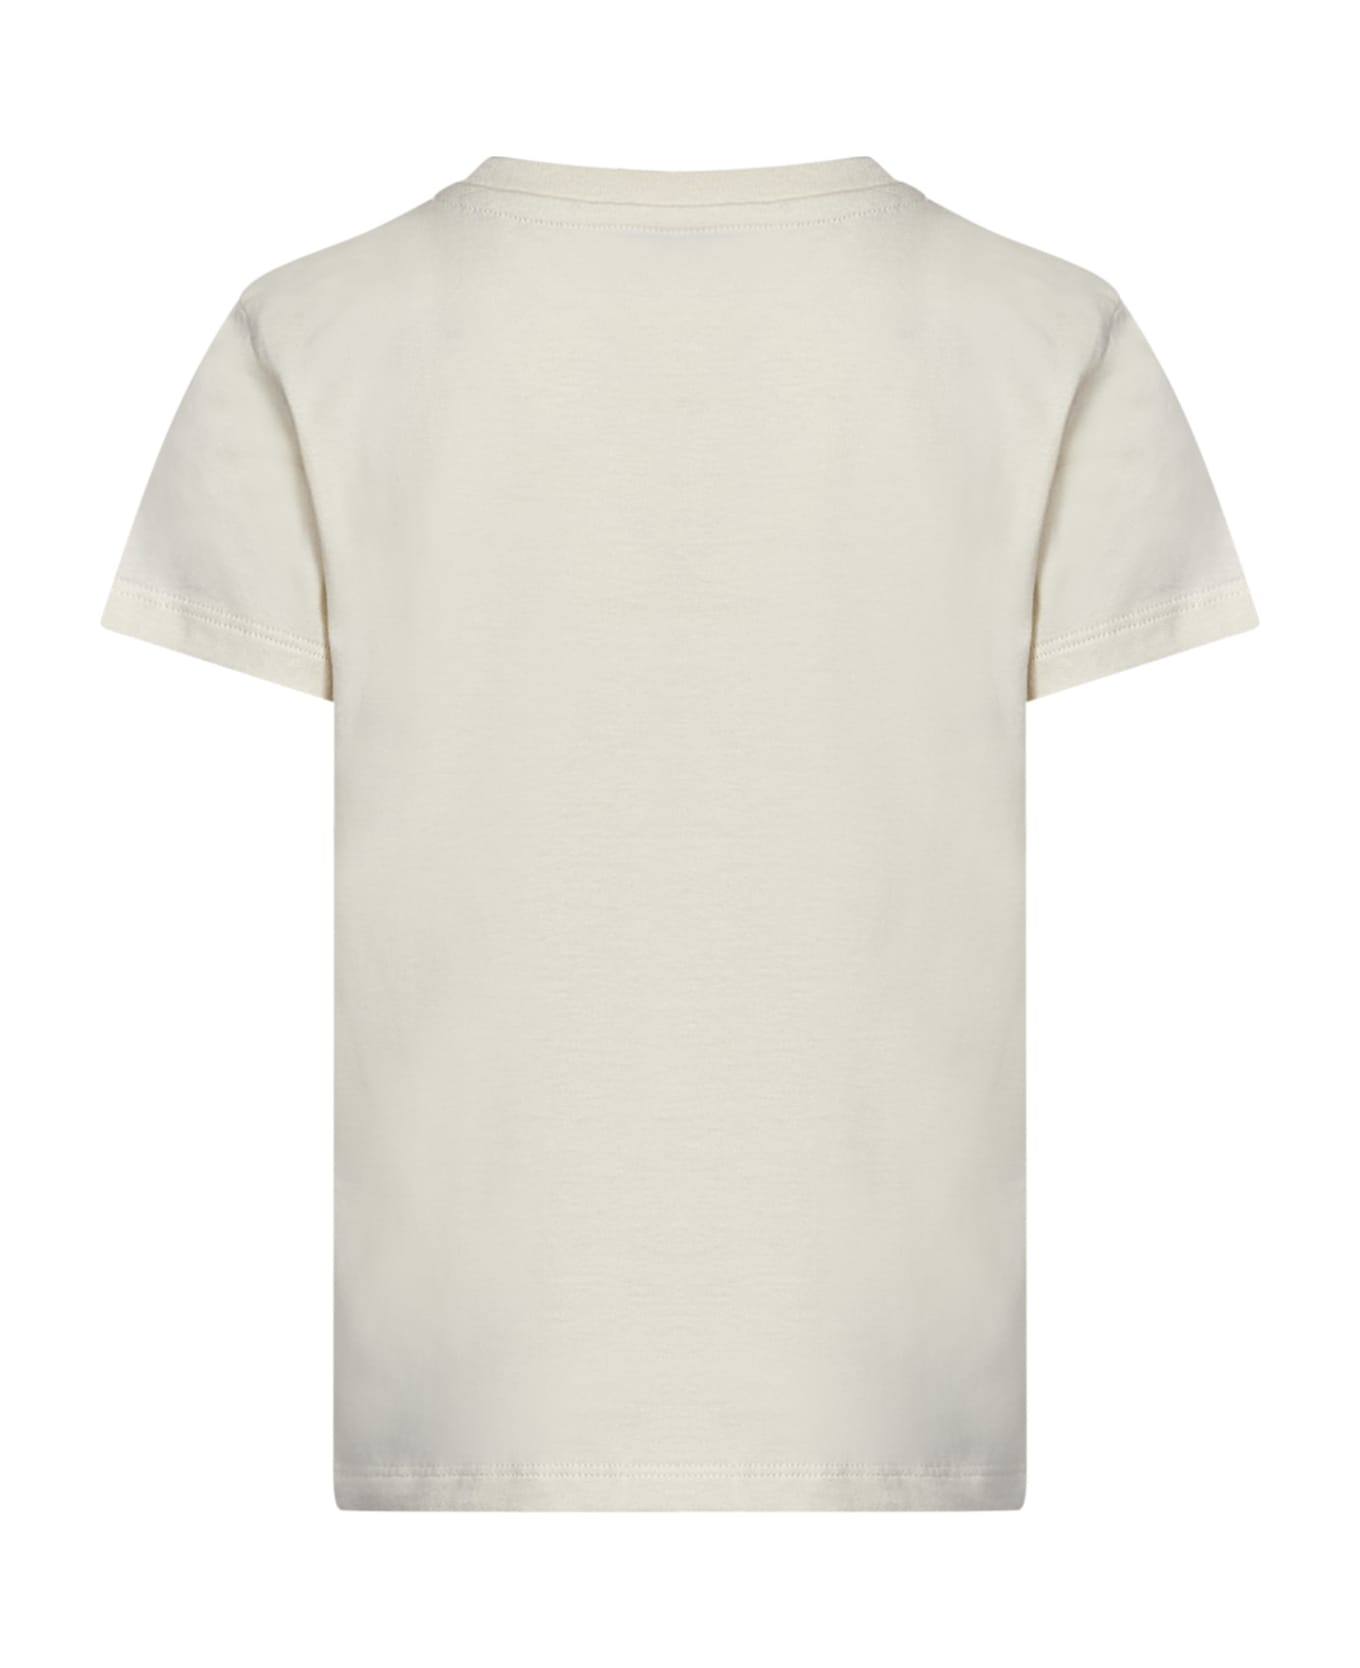 Moncler T-shirt - Cream Tシャツ＆ポロシャツ